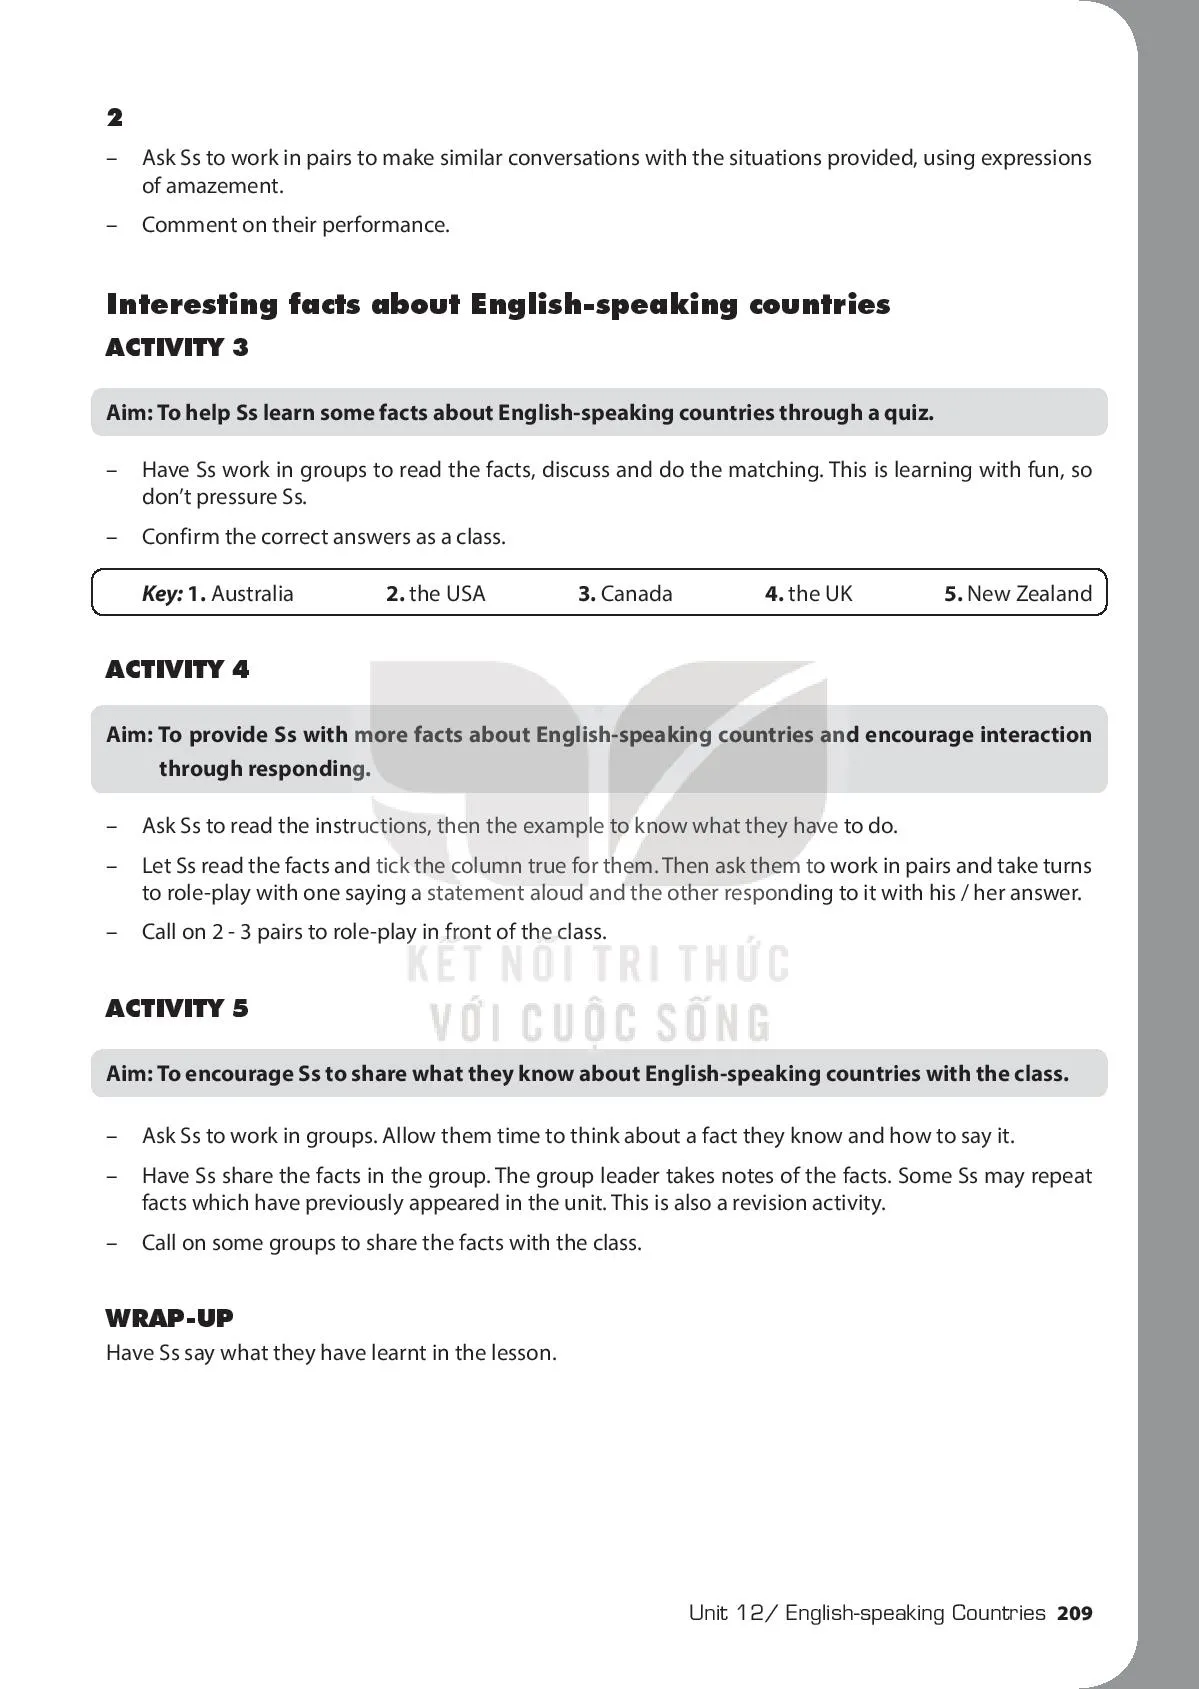 UNIT 12: ENGLISH-SPEAKING COUNTRIES